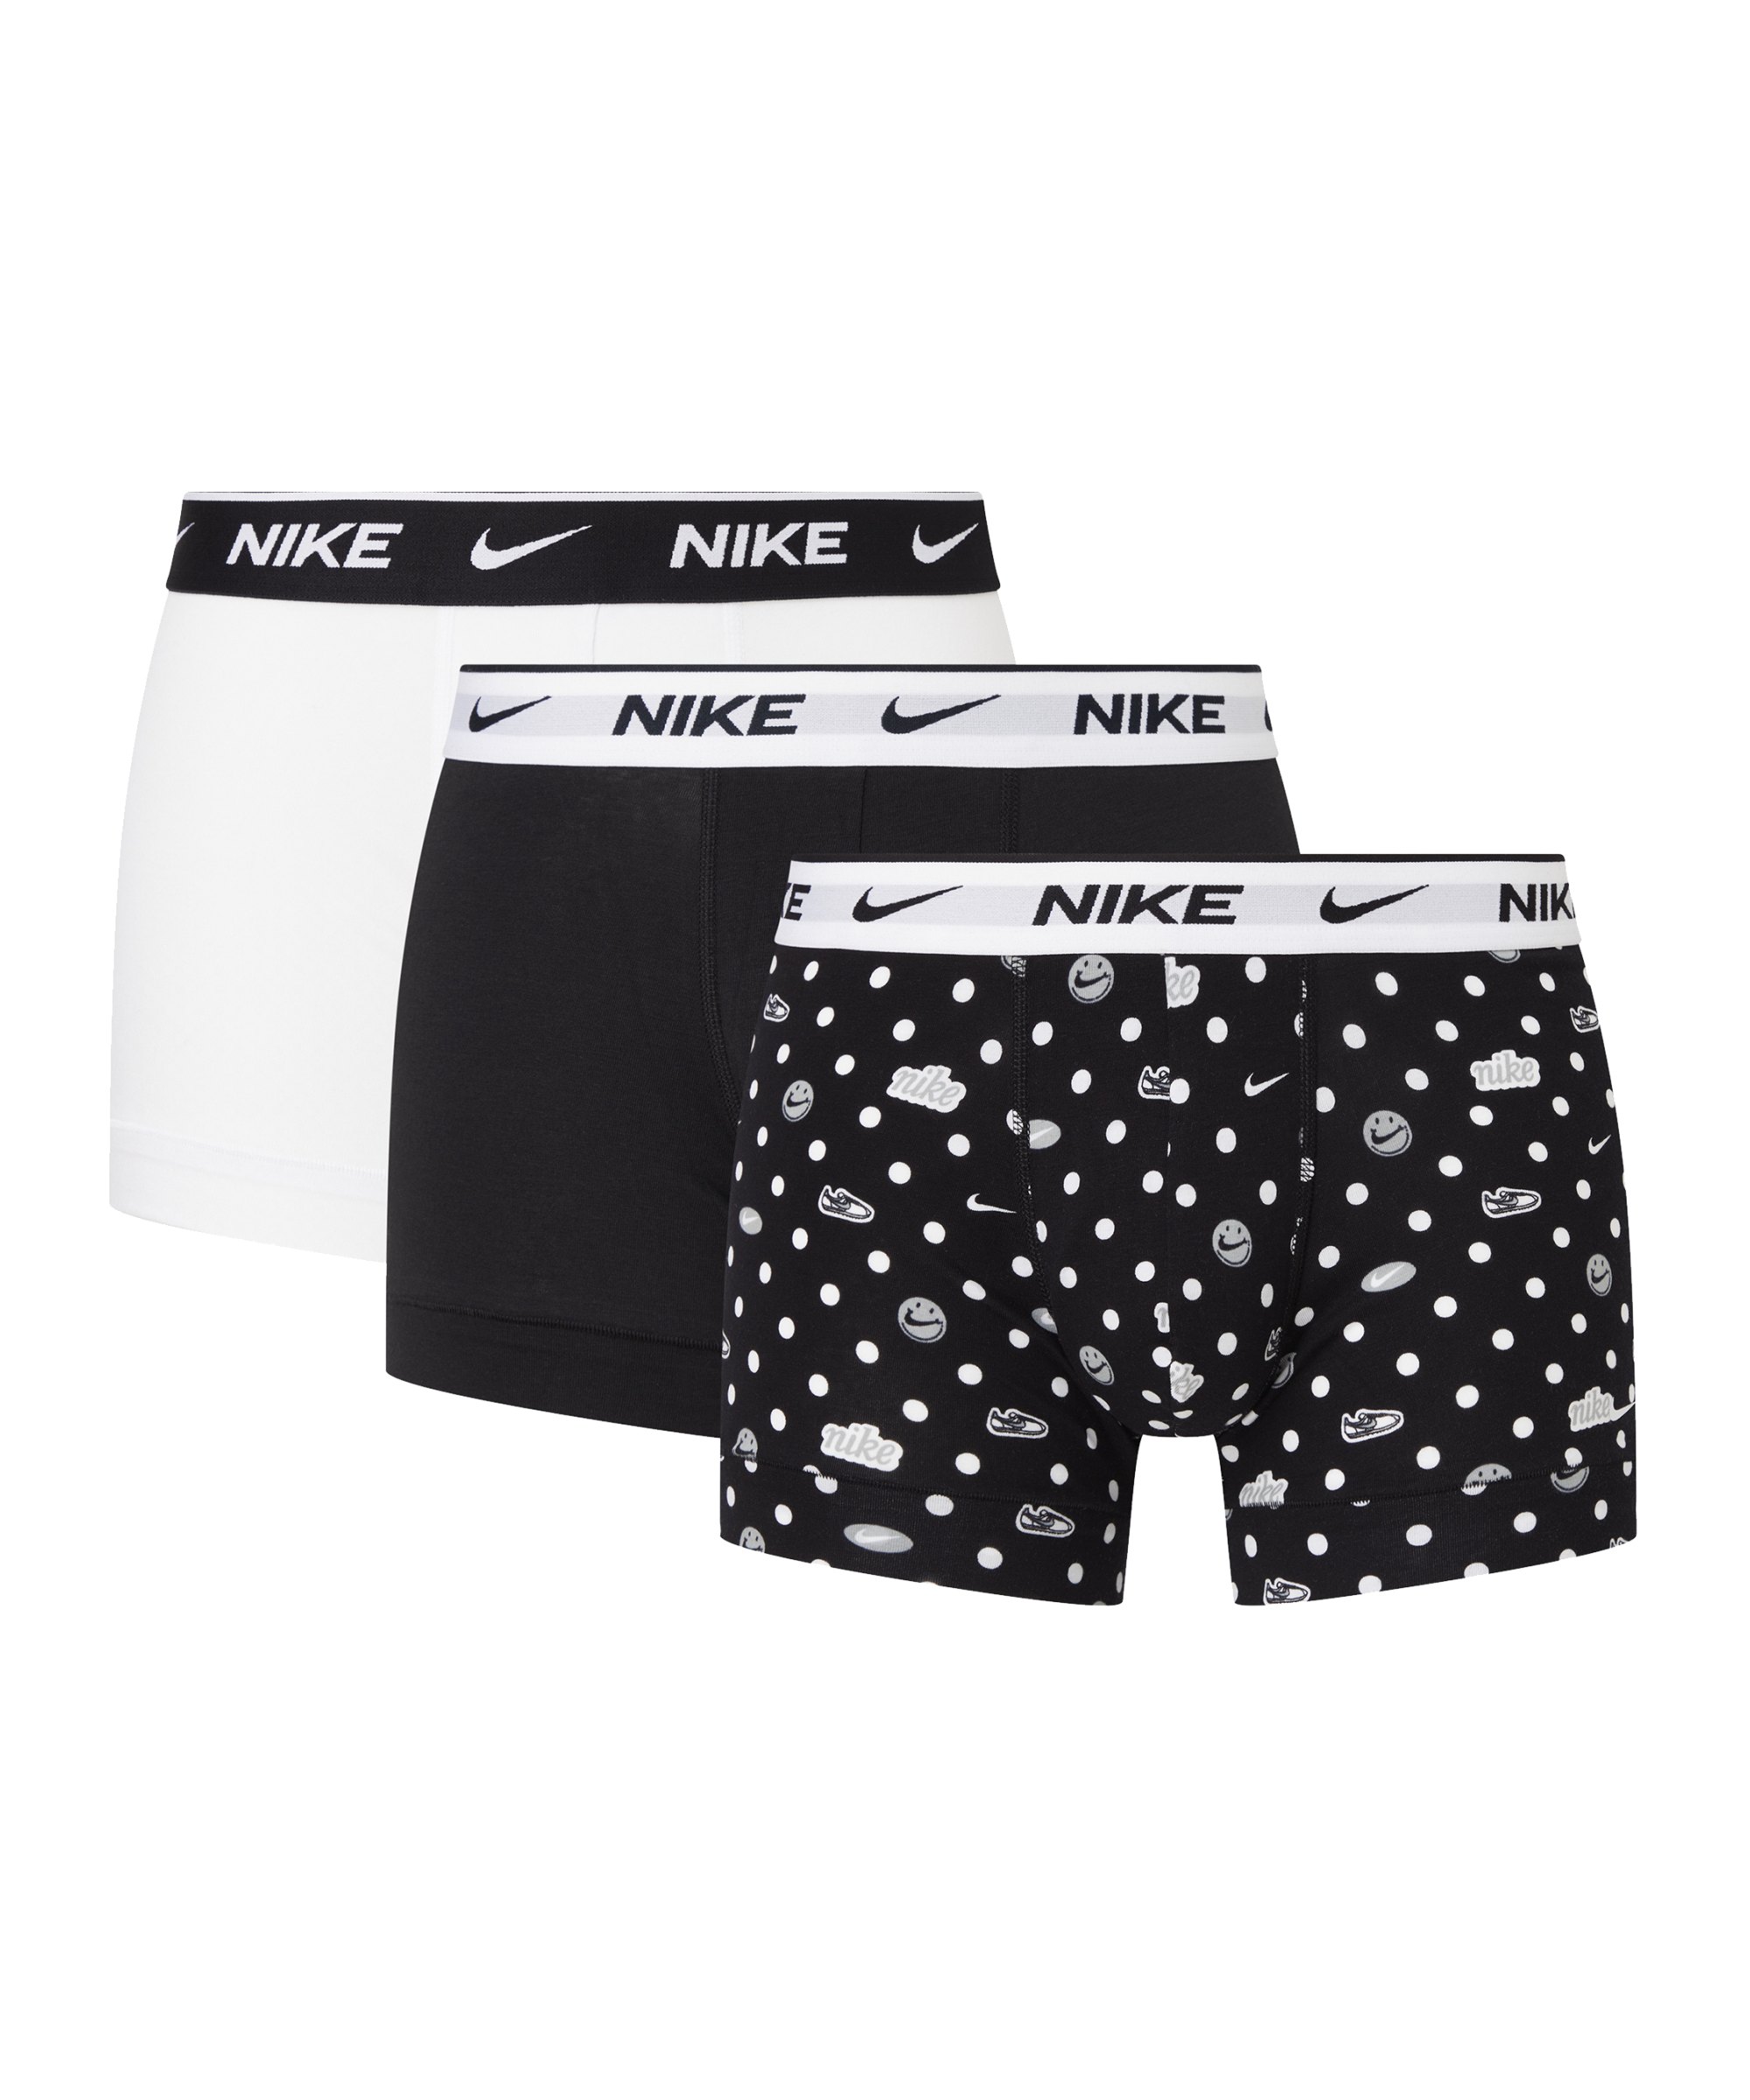 Nike Cotton Trunk Boxershort 3er Pack FAMM - schwarz